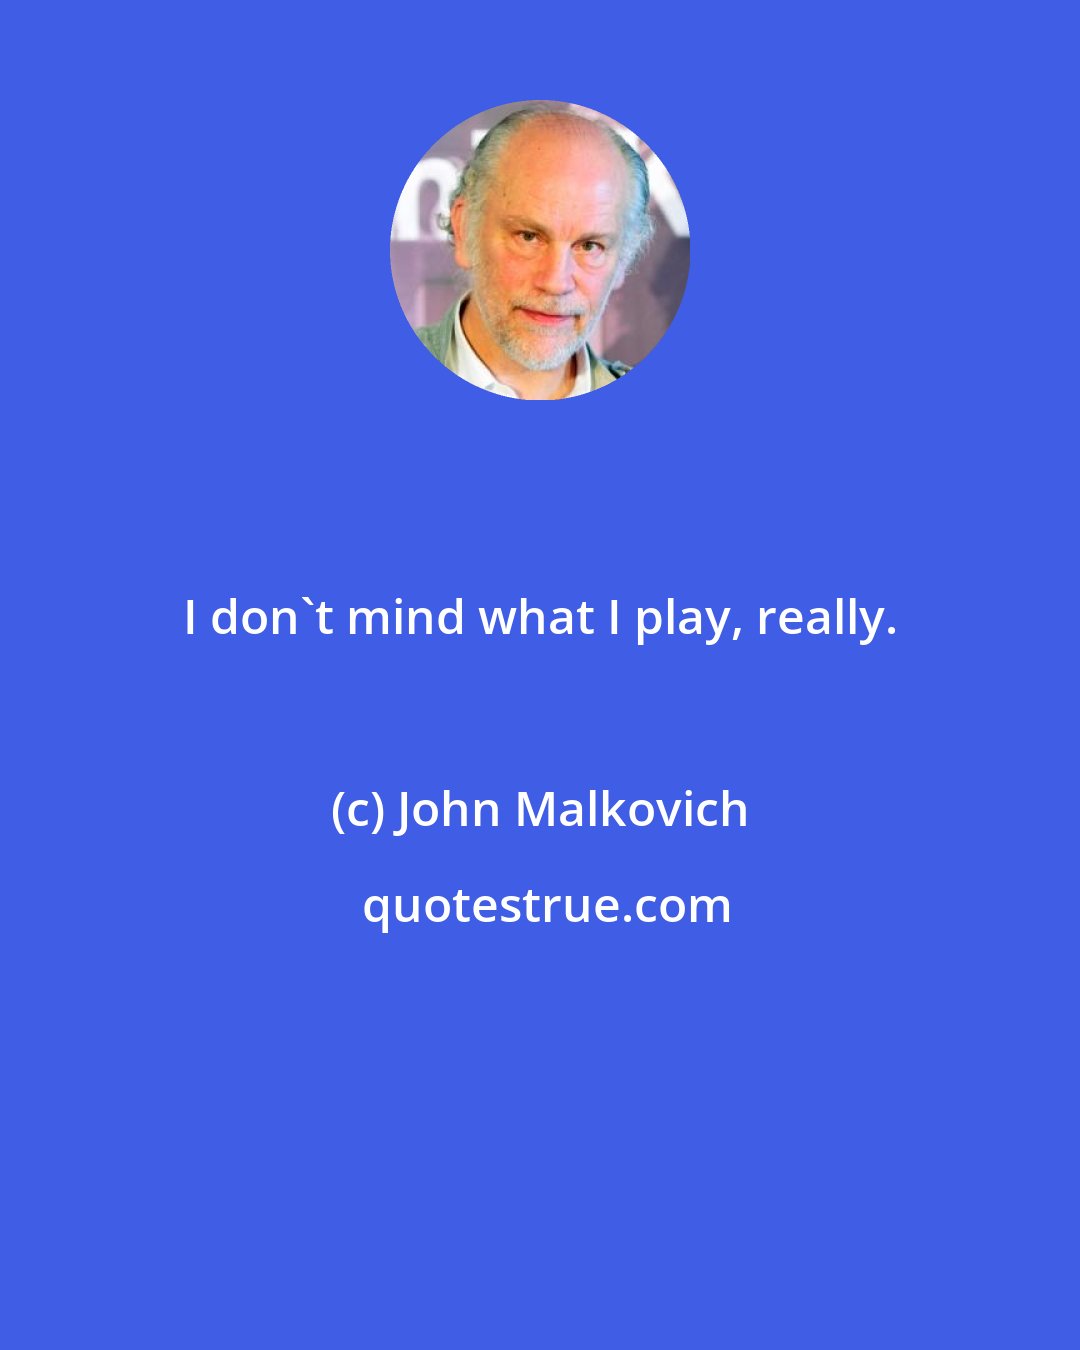 John Malkovich: I don't mind what I play, really.